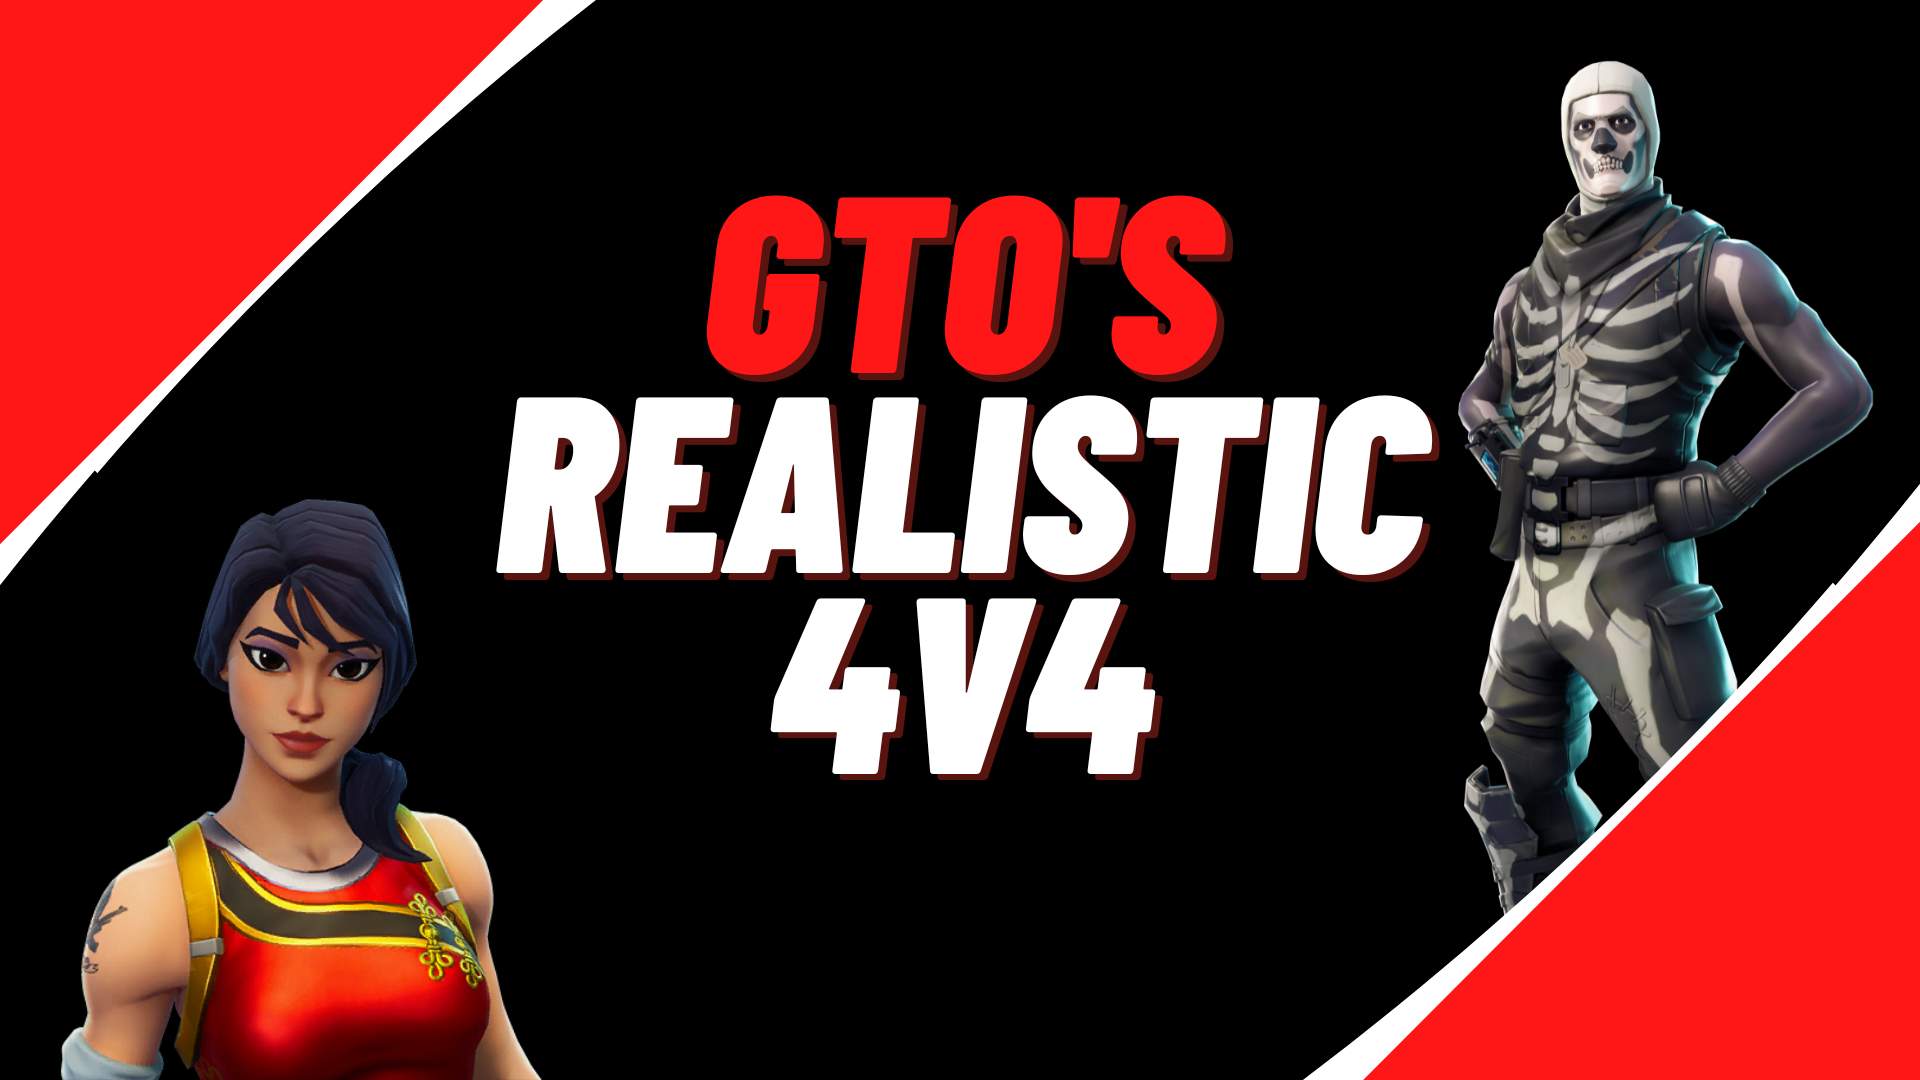 GTO'S 4v4 REALISTIC